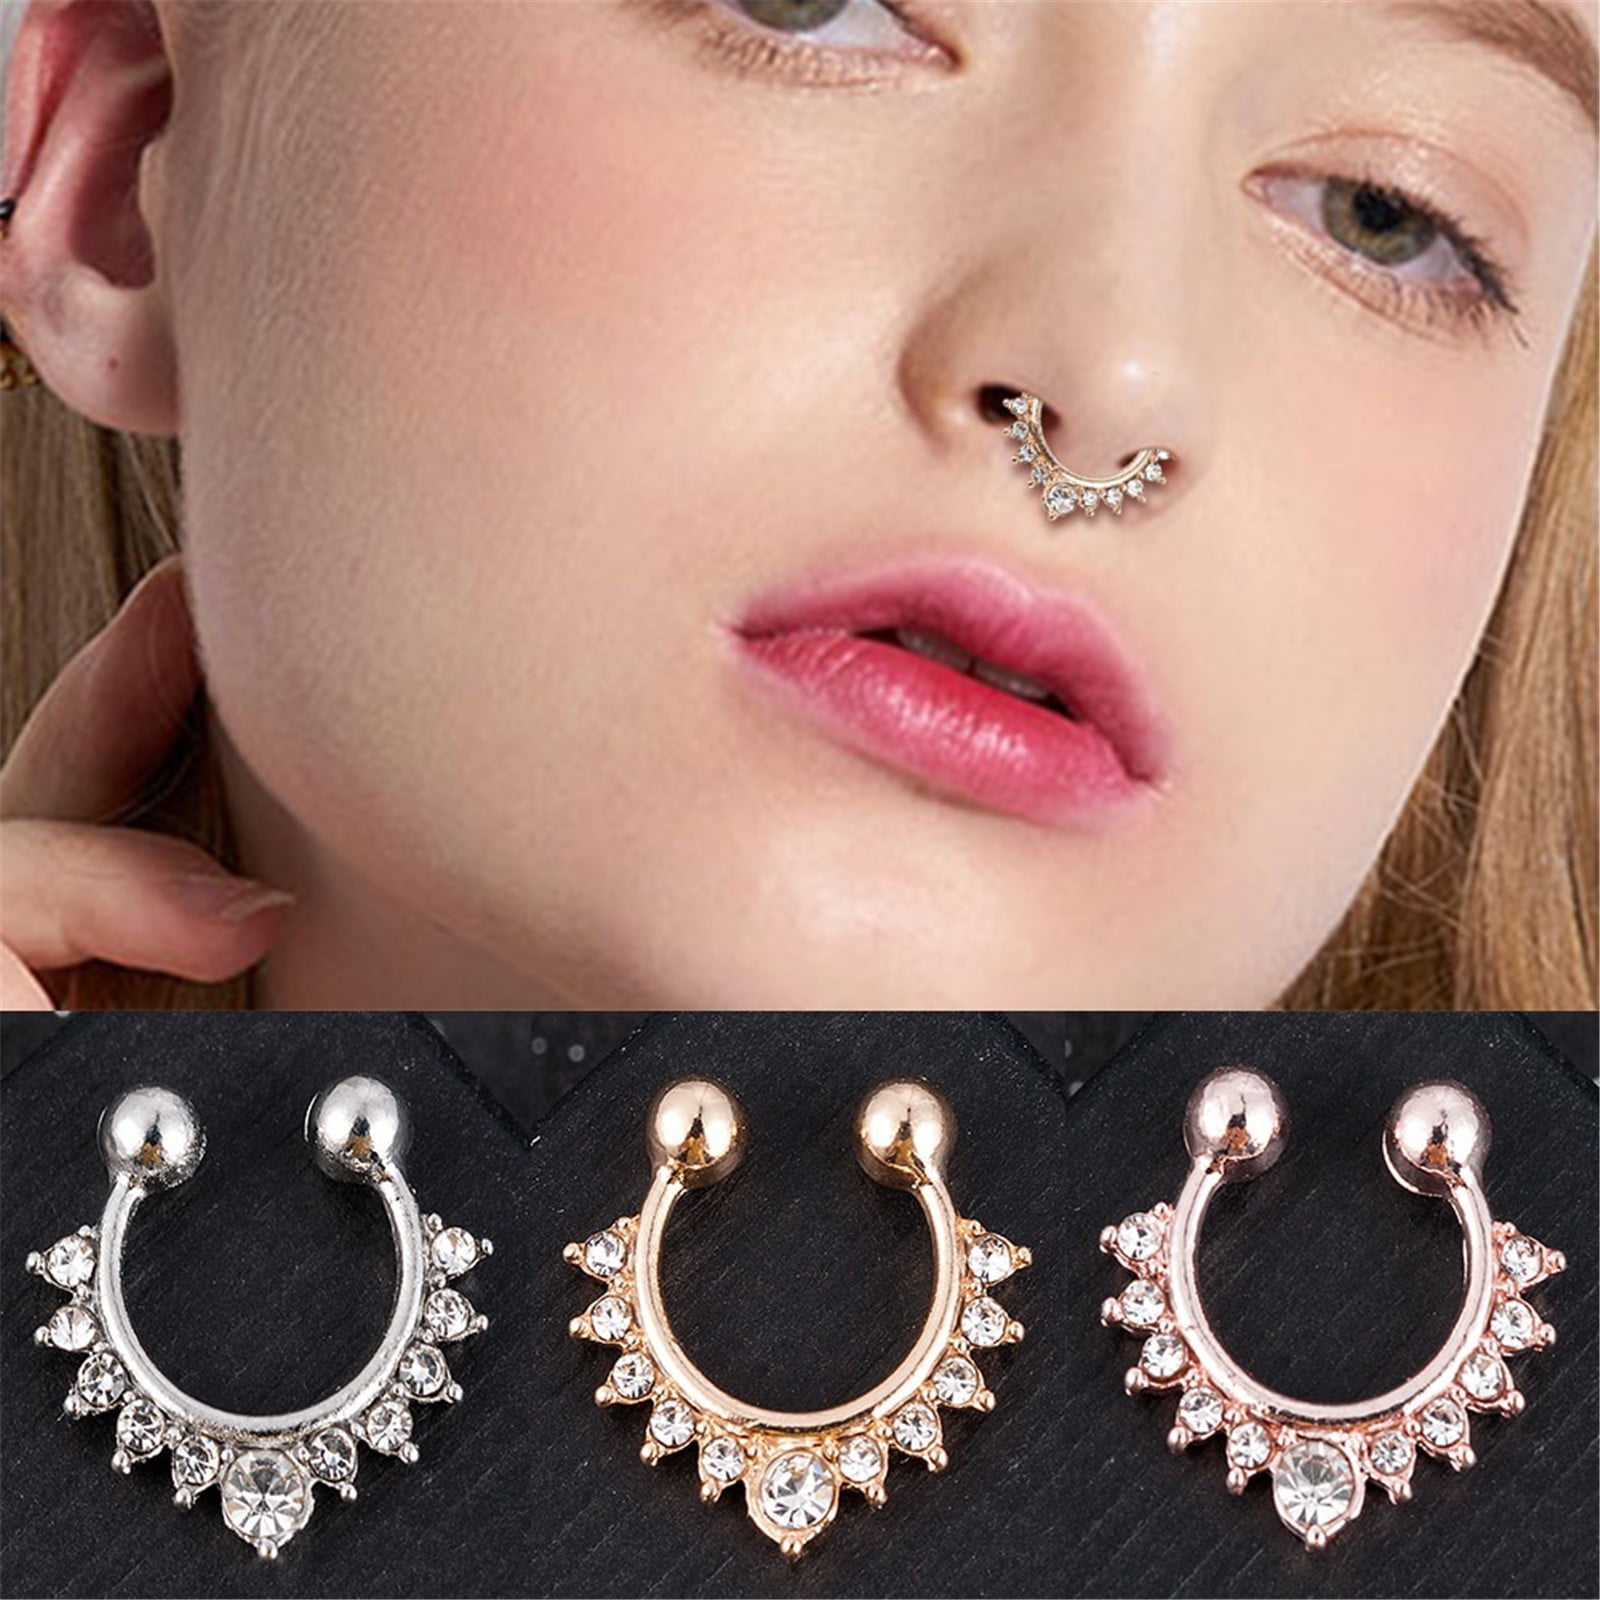 Cfxnmzgr Nose Jewelry For Women Septum Nose Rings Hoop Stainless Steel Lip Ear Nose Septum Ring